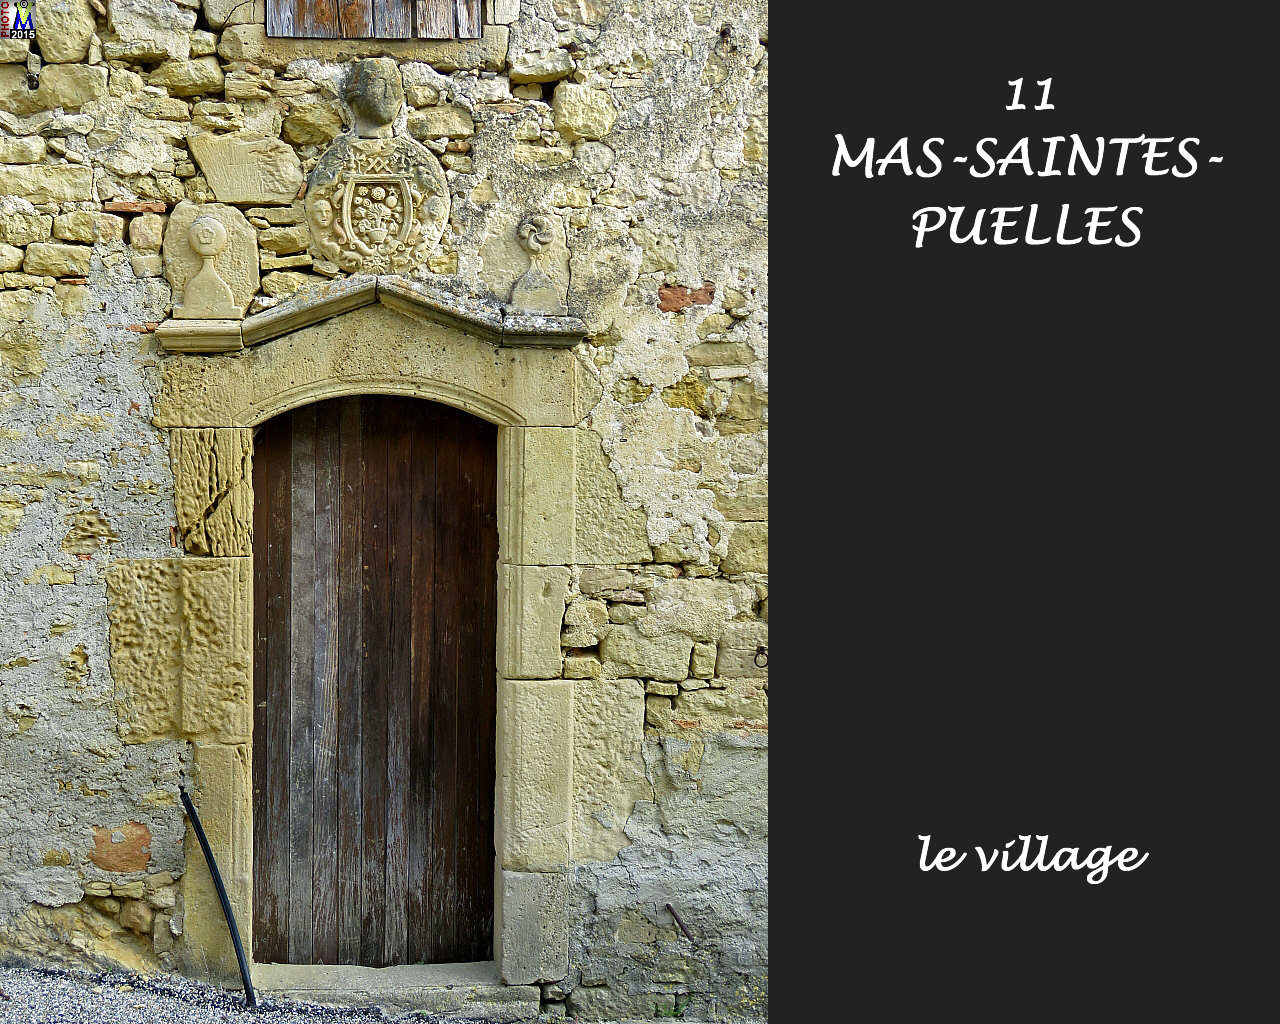 11MAS-SAINTES-PUELLES_village_102.jpg